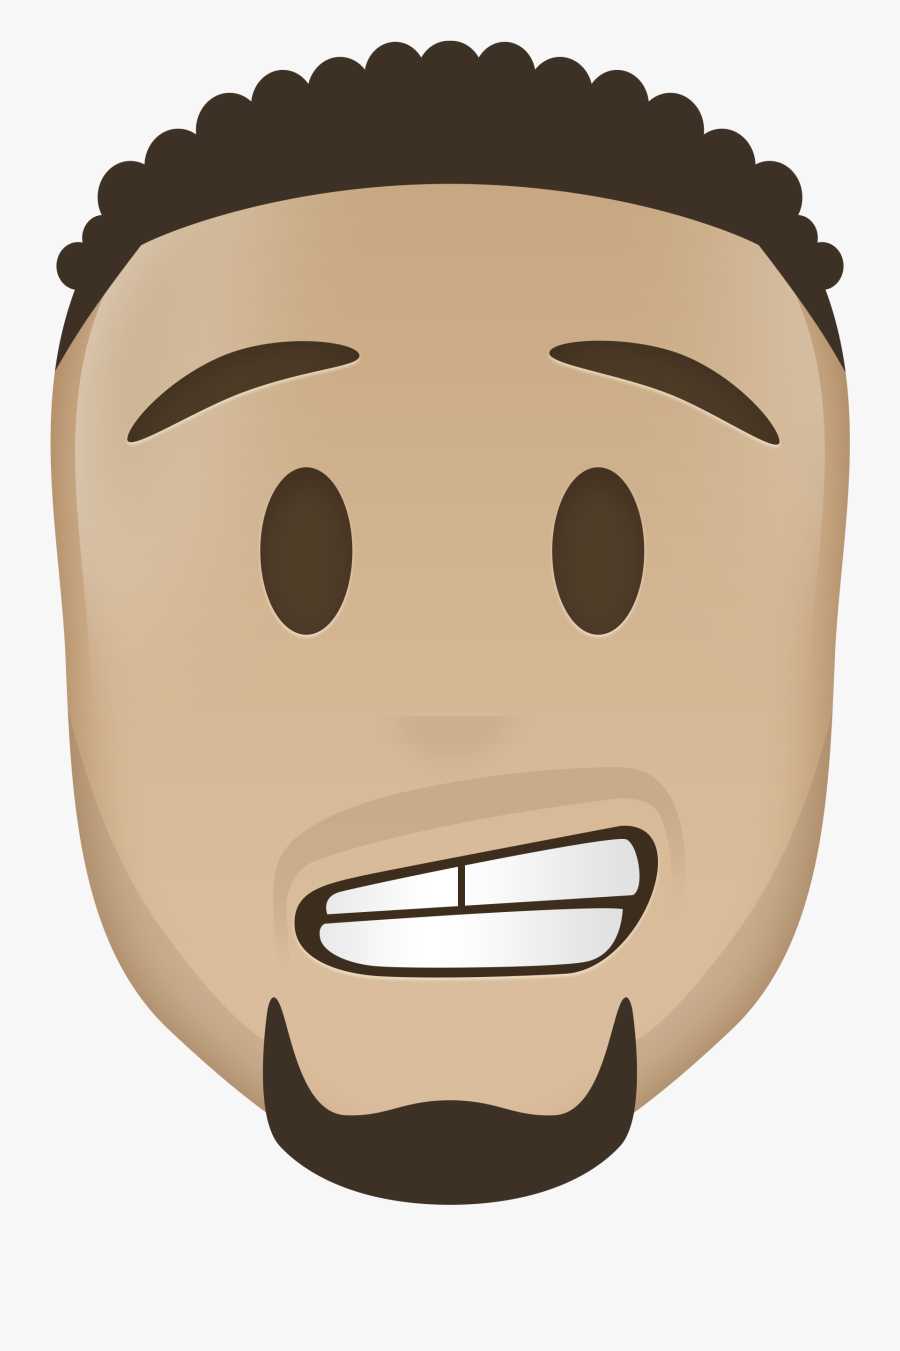 Steph Curry All Star Emoji, Transparent Clipart